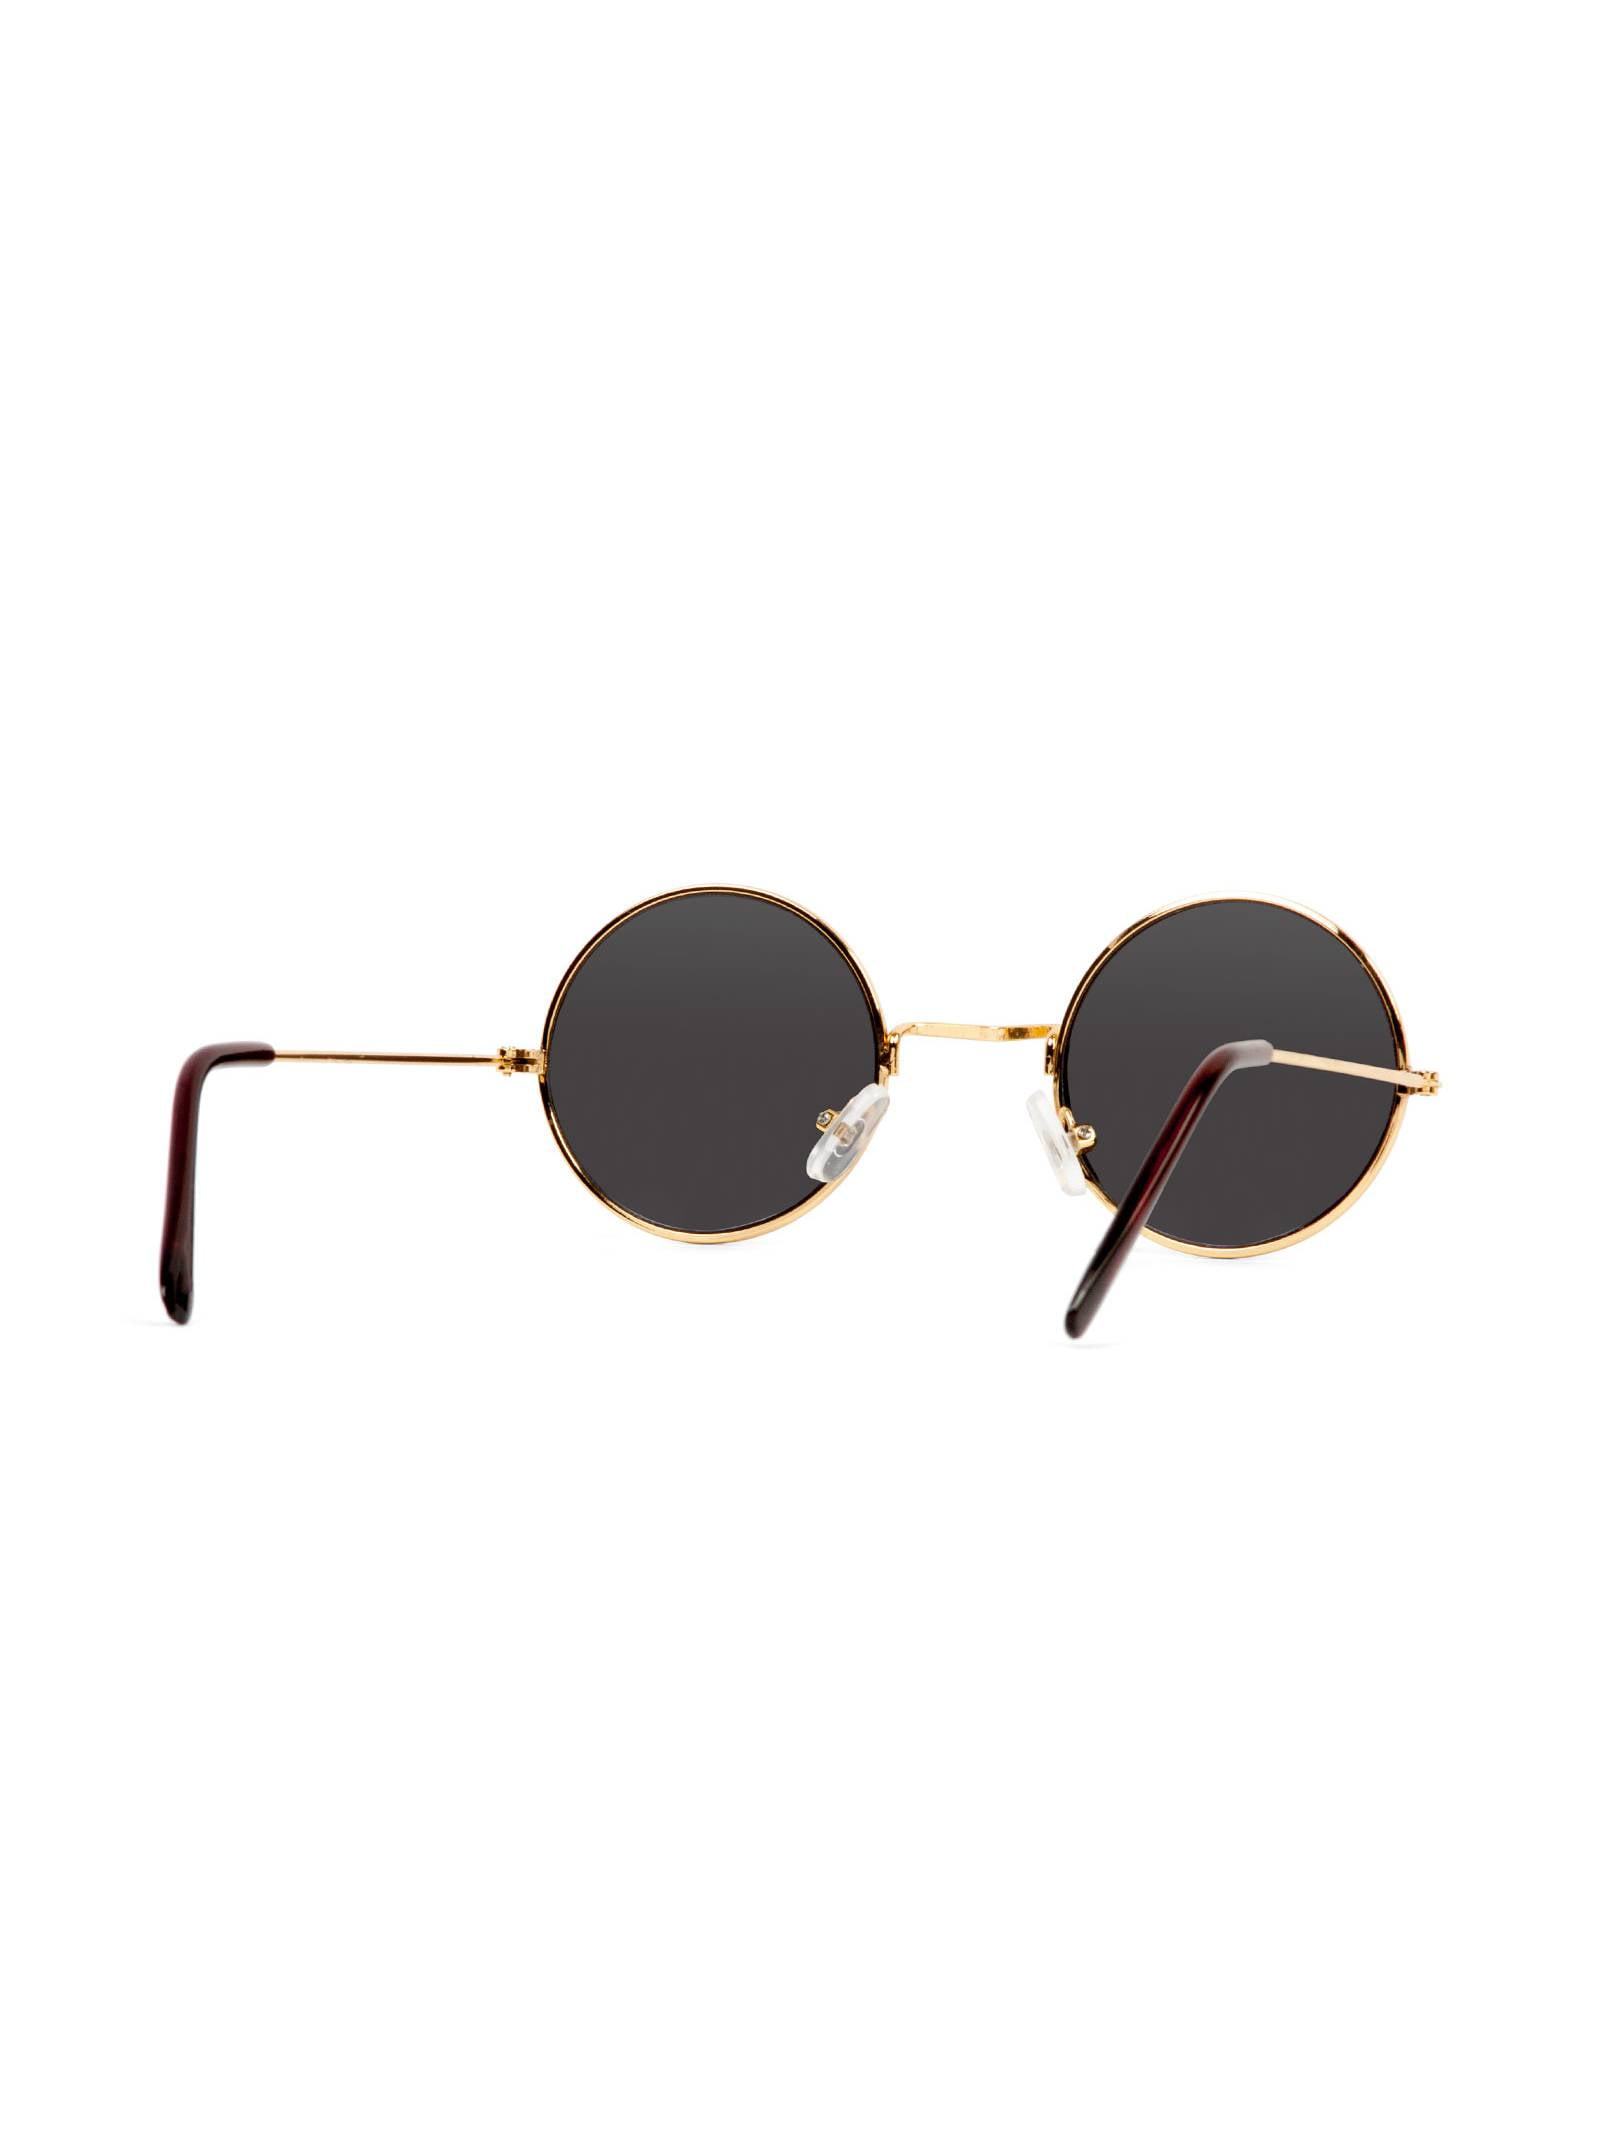 Gravity Shades Circular Gold (50mm) Frame Black Lens Sunglasses